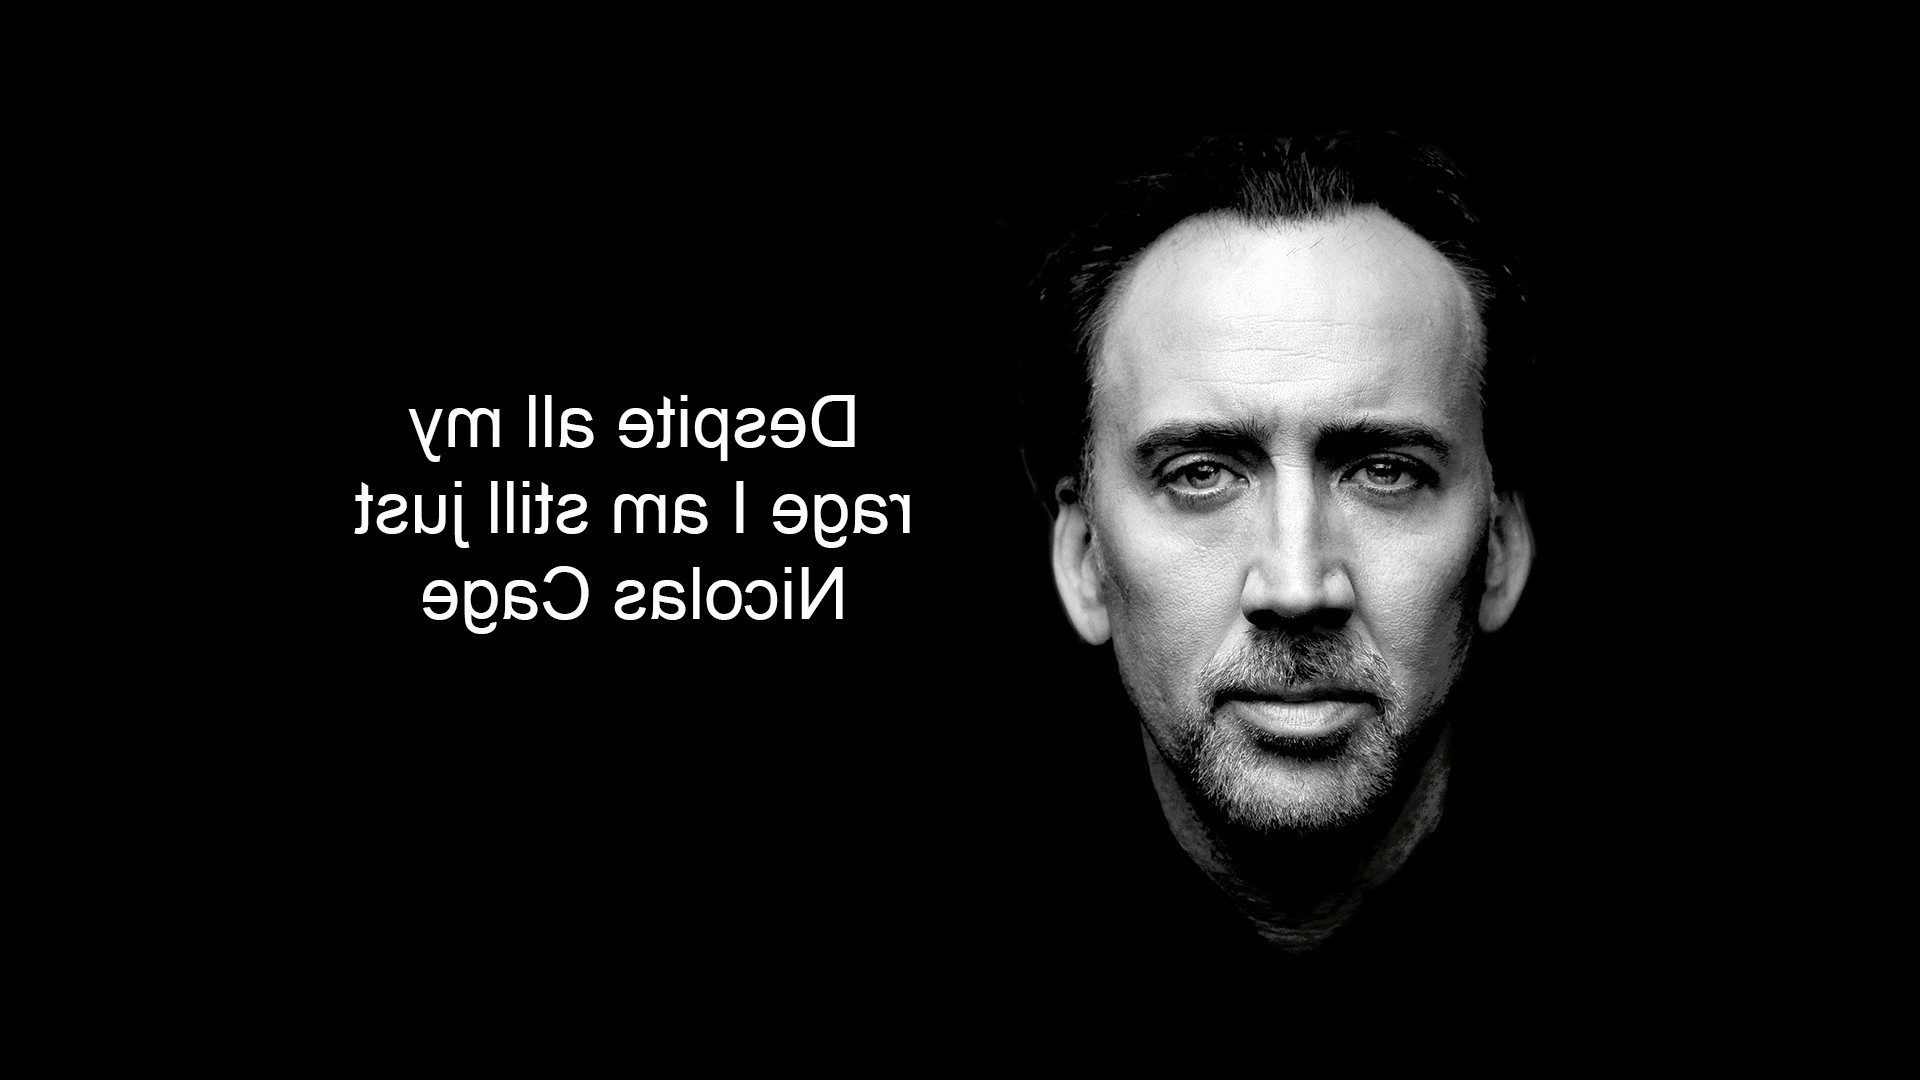 actor, Face, Nicolas Cage, Beards, Black Background, Simple, Monochrome, Quote, Text, Humor, Lyrics, Smashing Pumpkins, Music Wallpaper